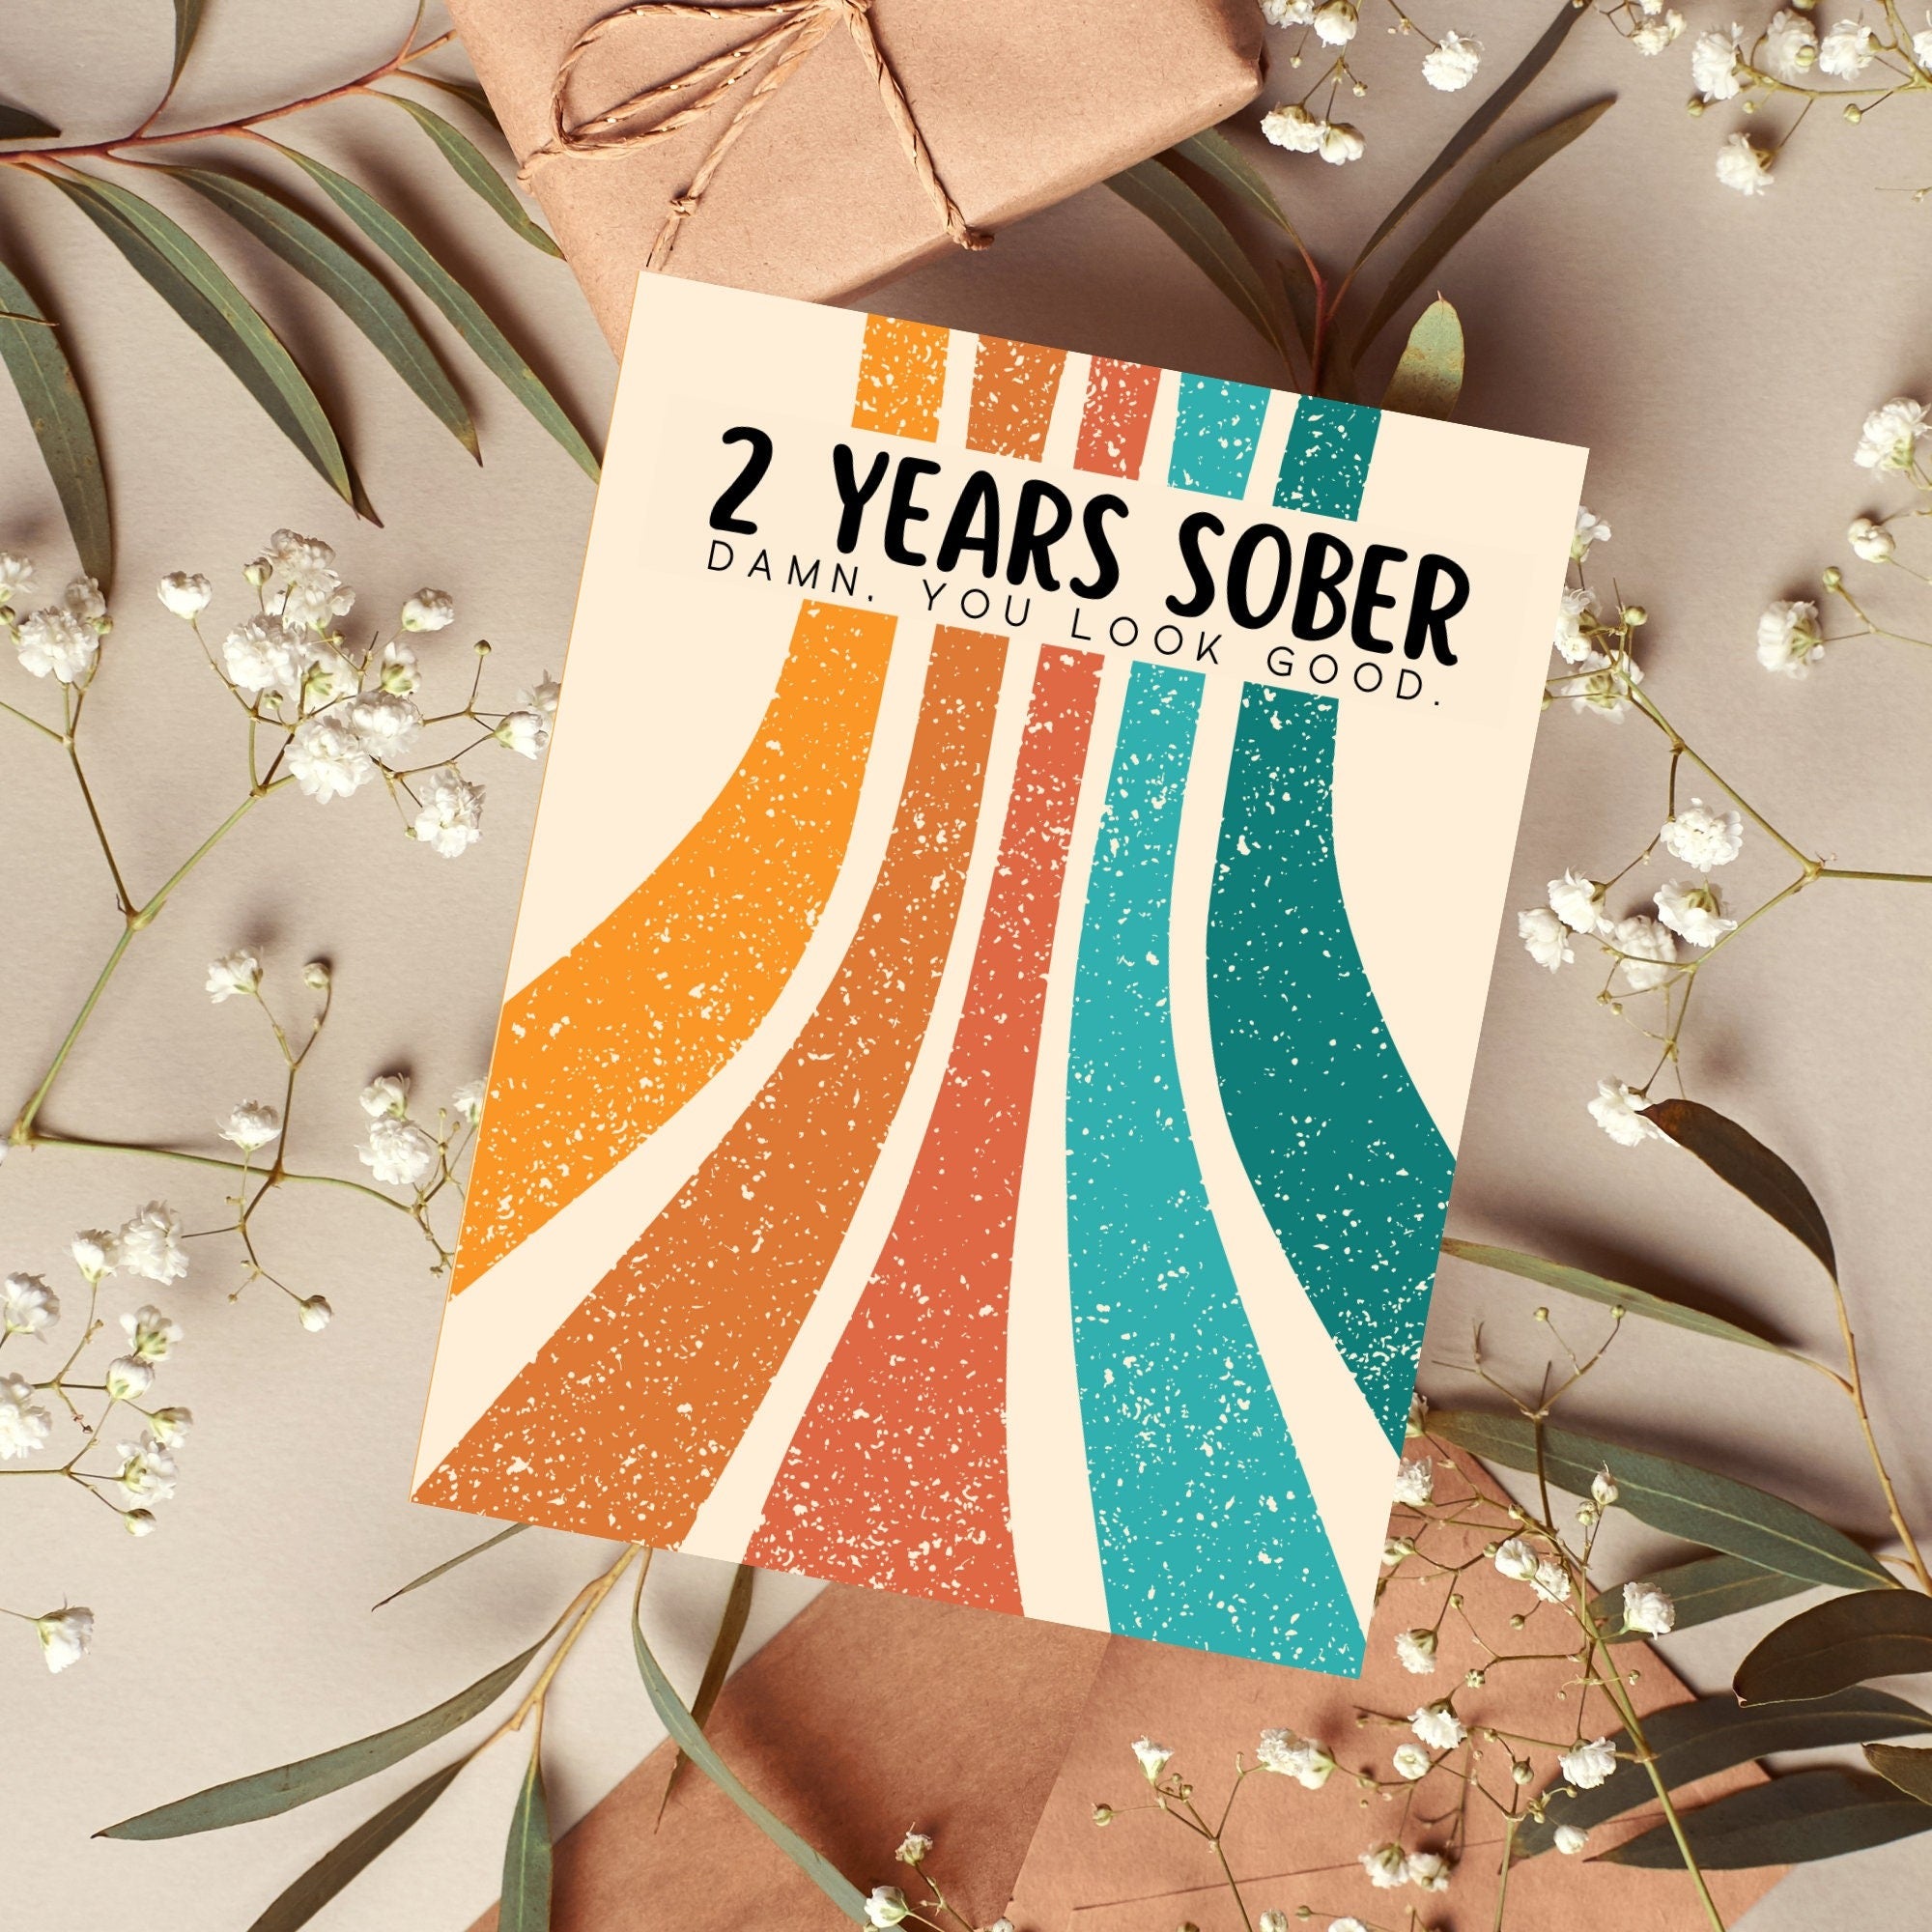 2 Years Sober Card